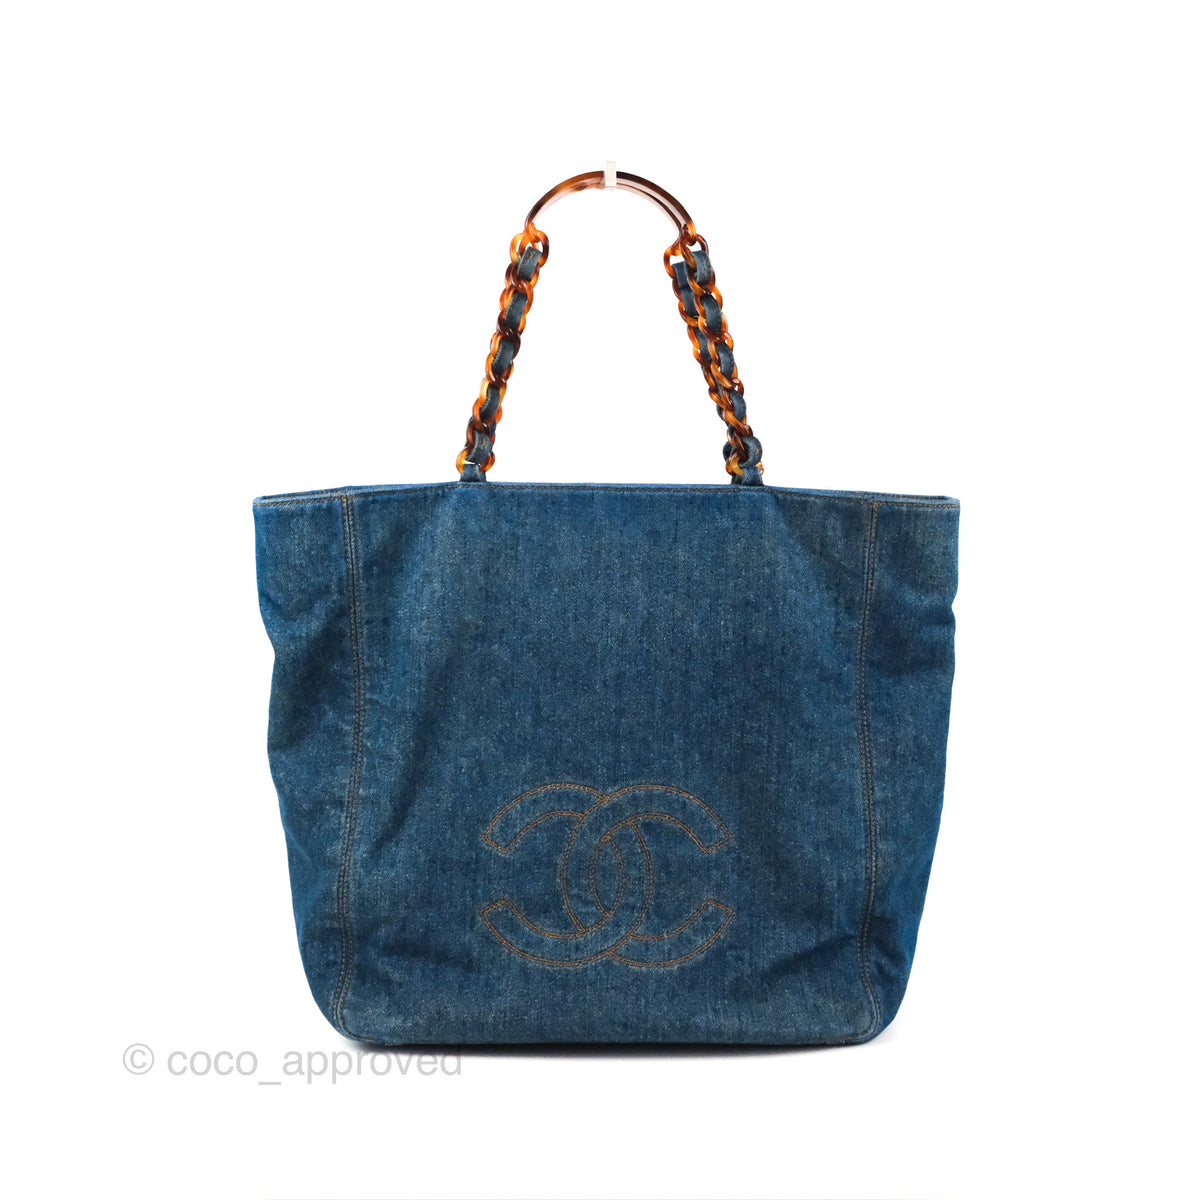 Chanel Large CC Tote Bag Blue Denim Tortoiseshell Bakelite Handle